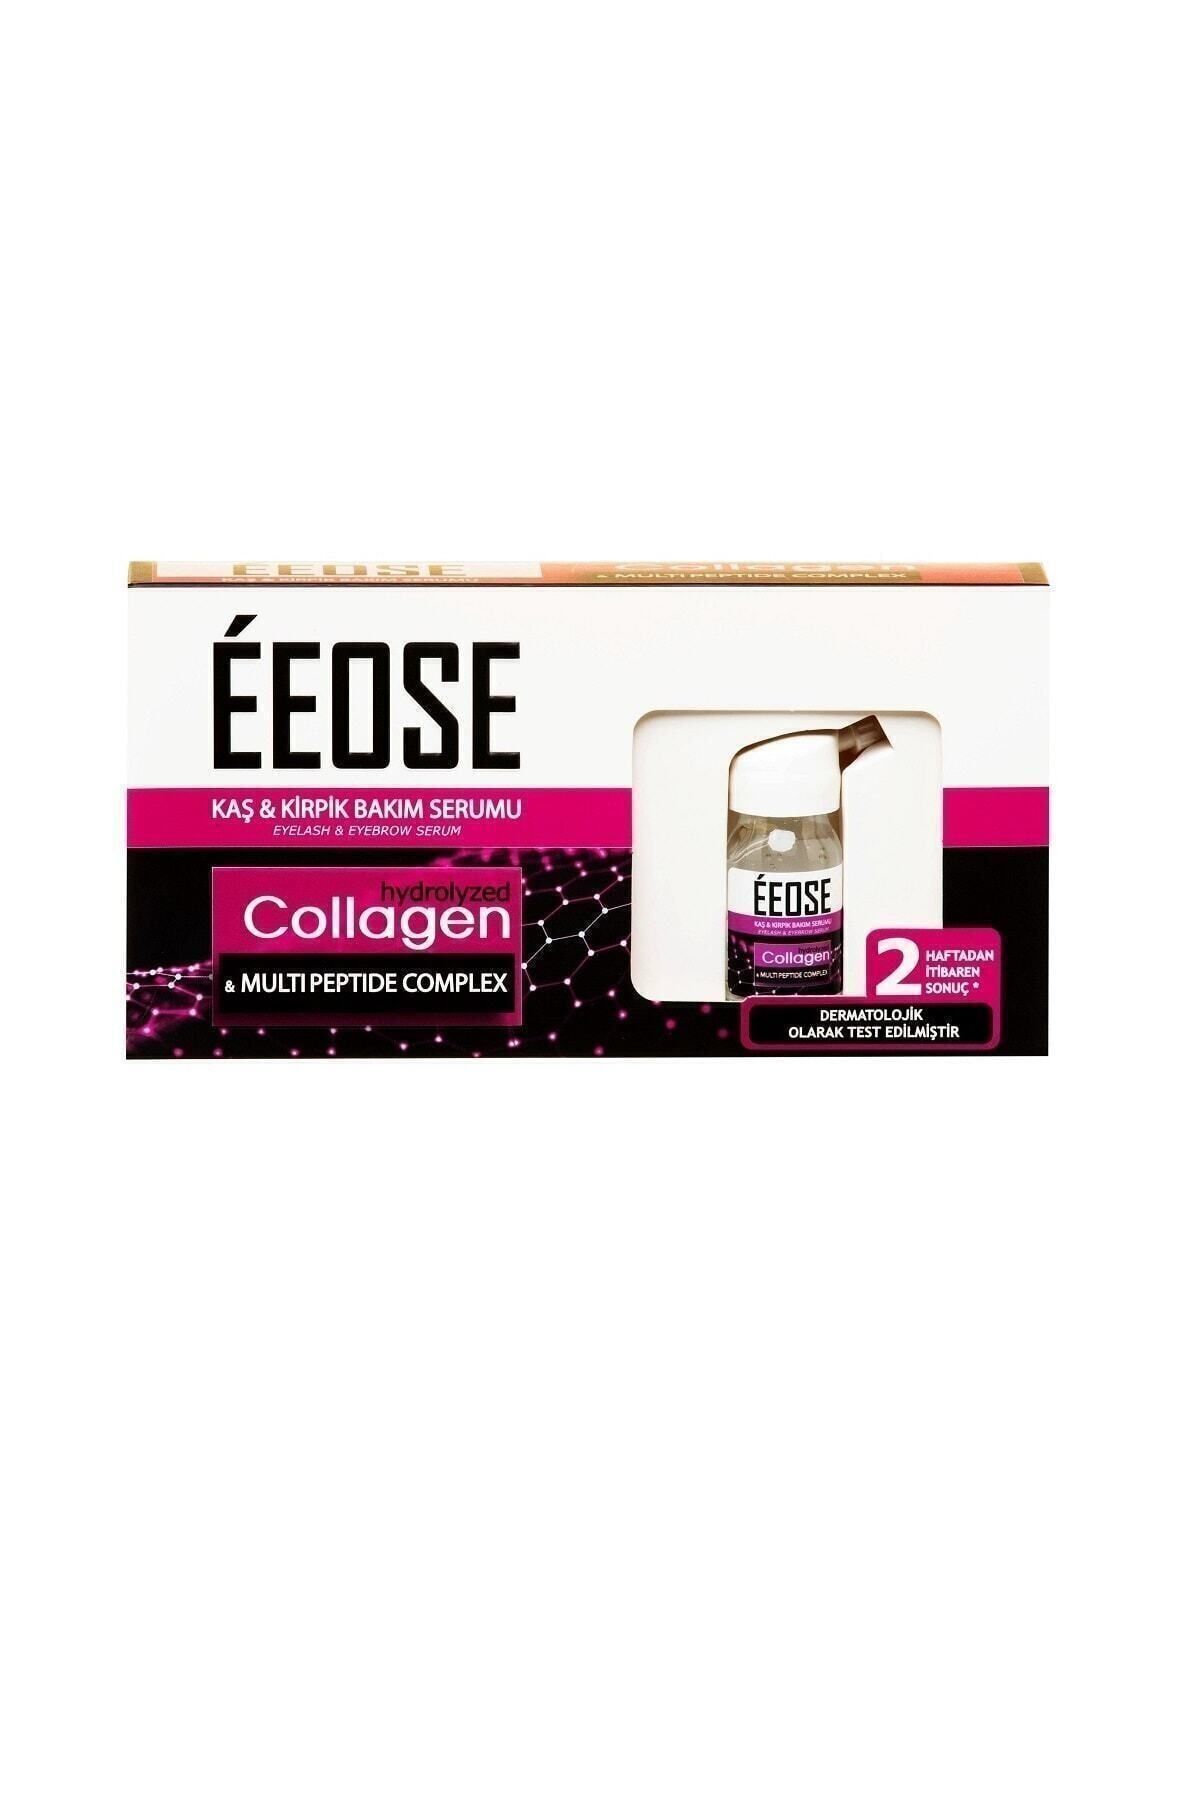 Eeose Collagen Kaş Ve Kirpik Serumu 8680057351298